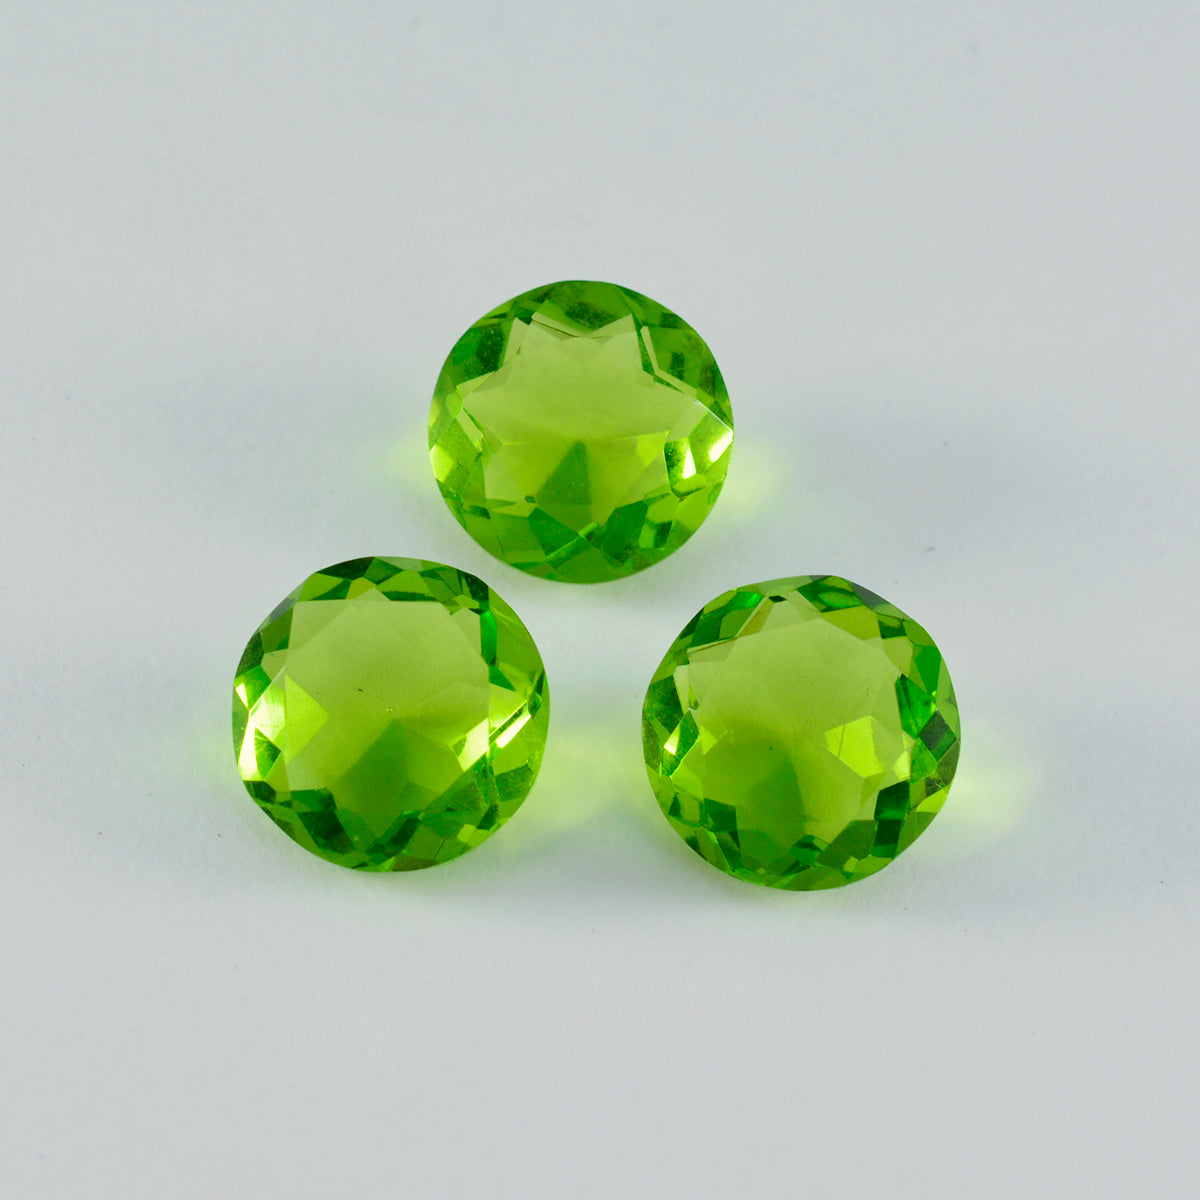 Riyogems 1PC Green Peridot CZ Faceted 12x12 mm Round Shape beautiful Quality Loose Gemstone